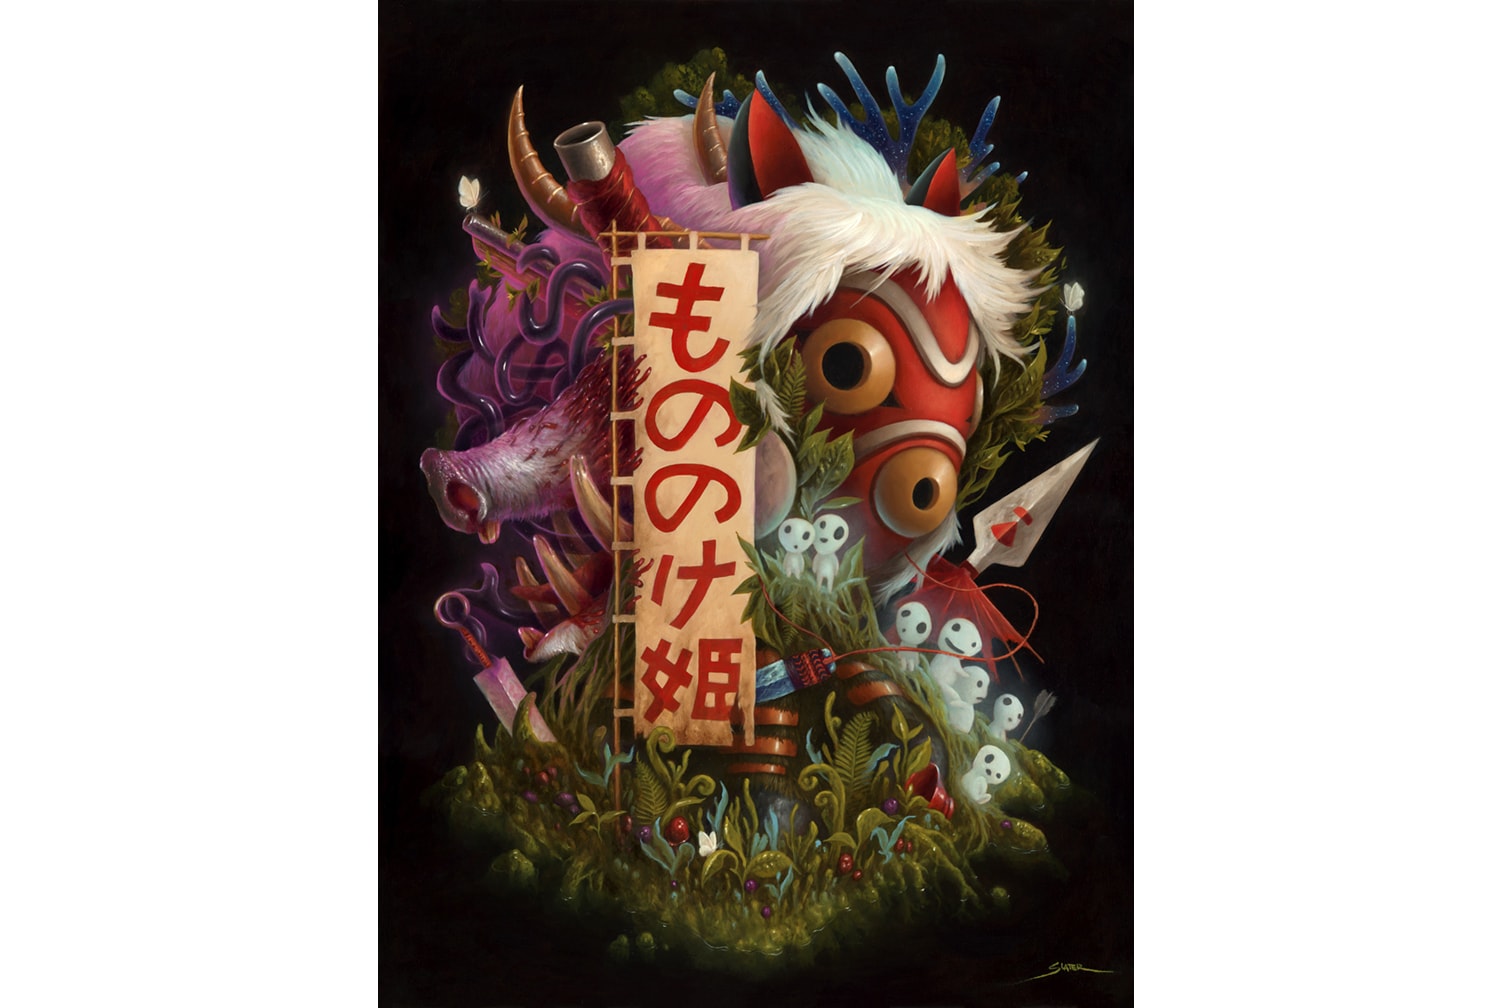 Hayao Miyazaki Spoke Art Gallery New York City Art Artwork Exhibit Studio Ghibli